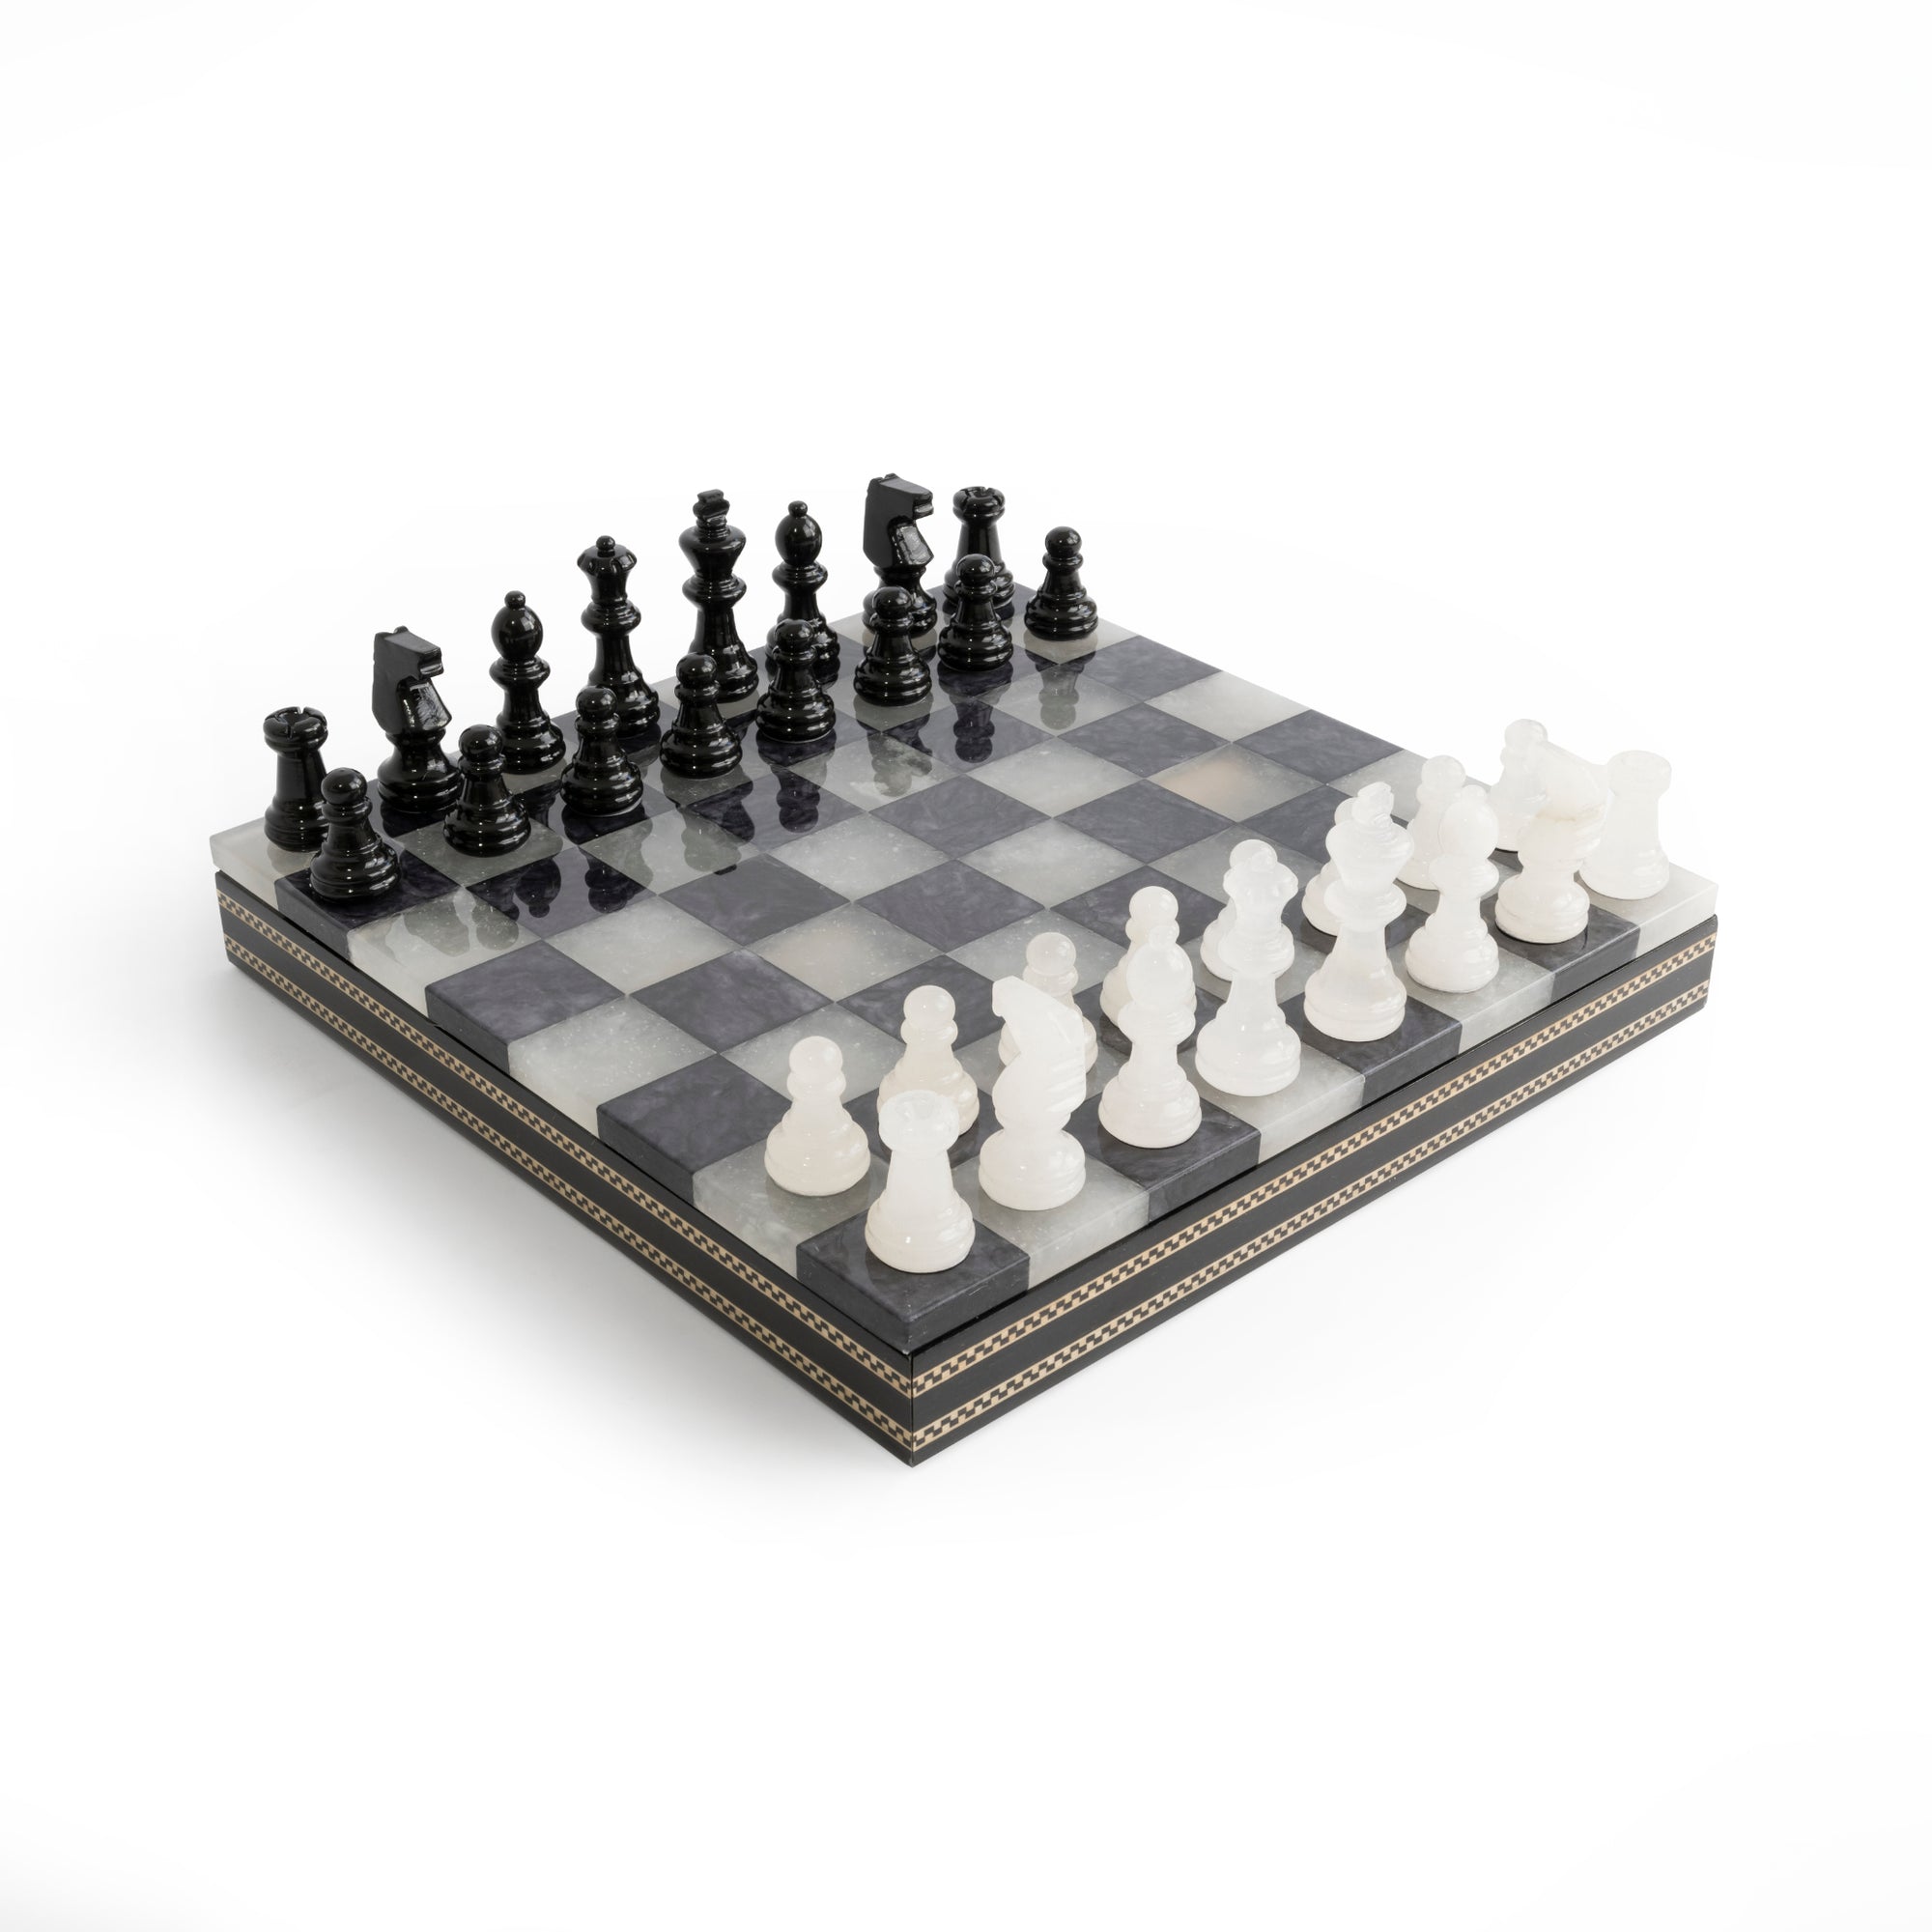 Scali-alabastro-14156_NS-Nero-Bianco-alabaster-white-black-marble-stone-quality-chess-set-australia-italian-italy-hand-made-storage-hero-white.jpg